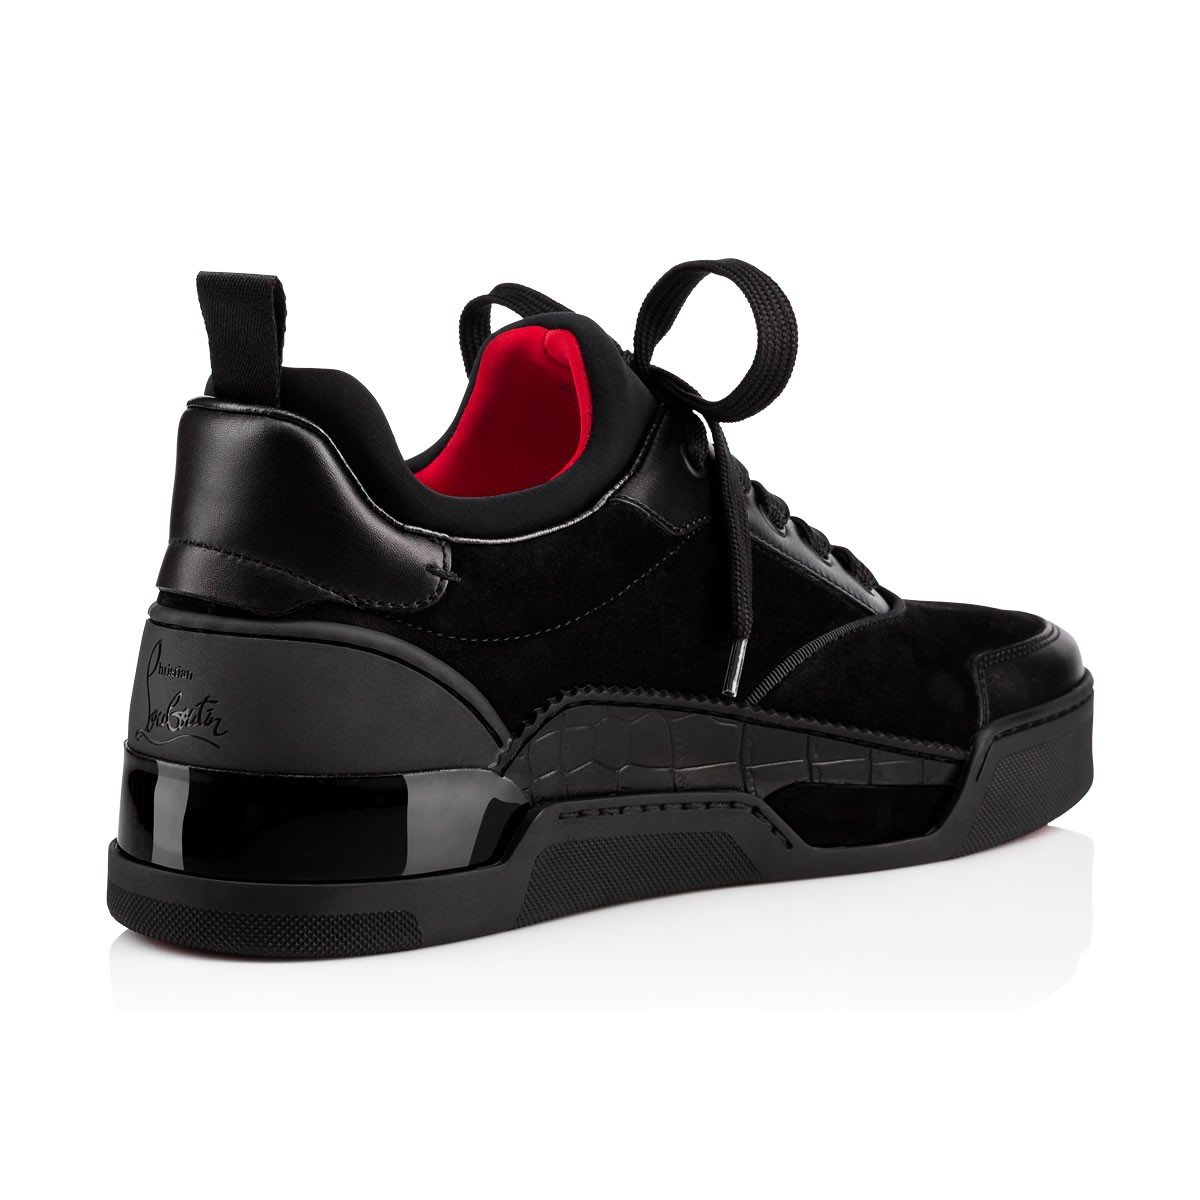 Christian Louboutin Aurelien flat sneakers for Men - Black in